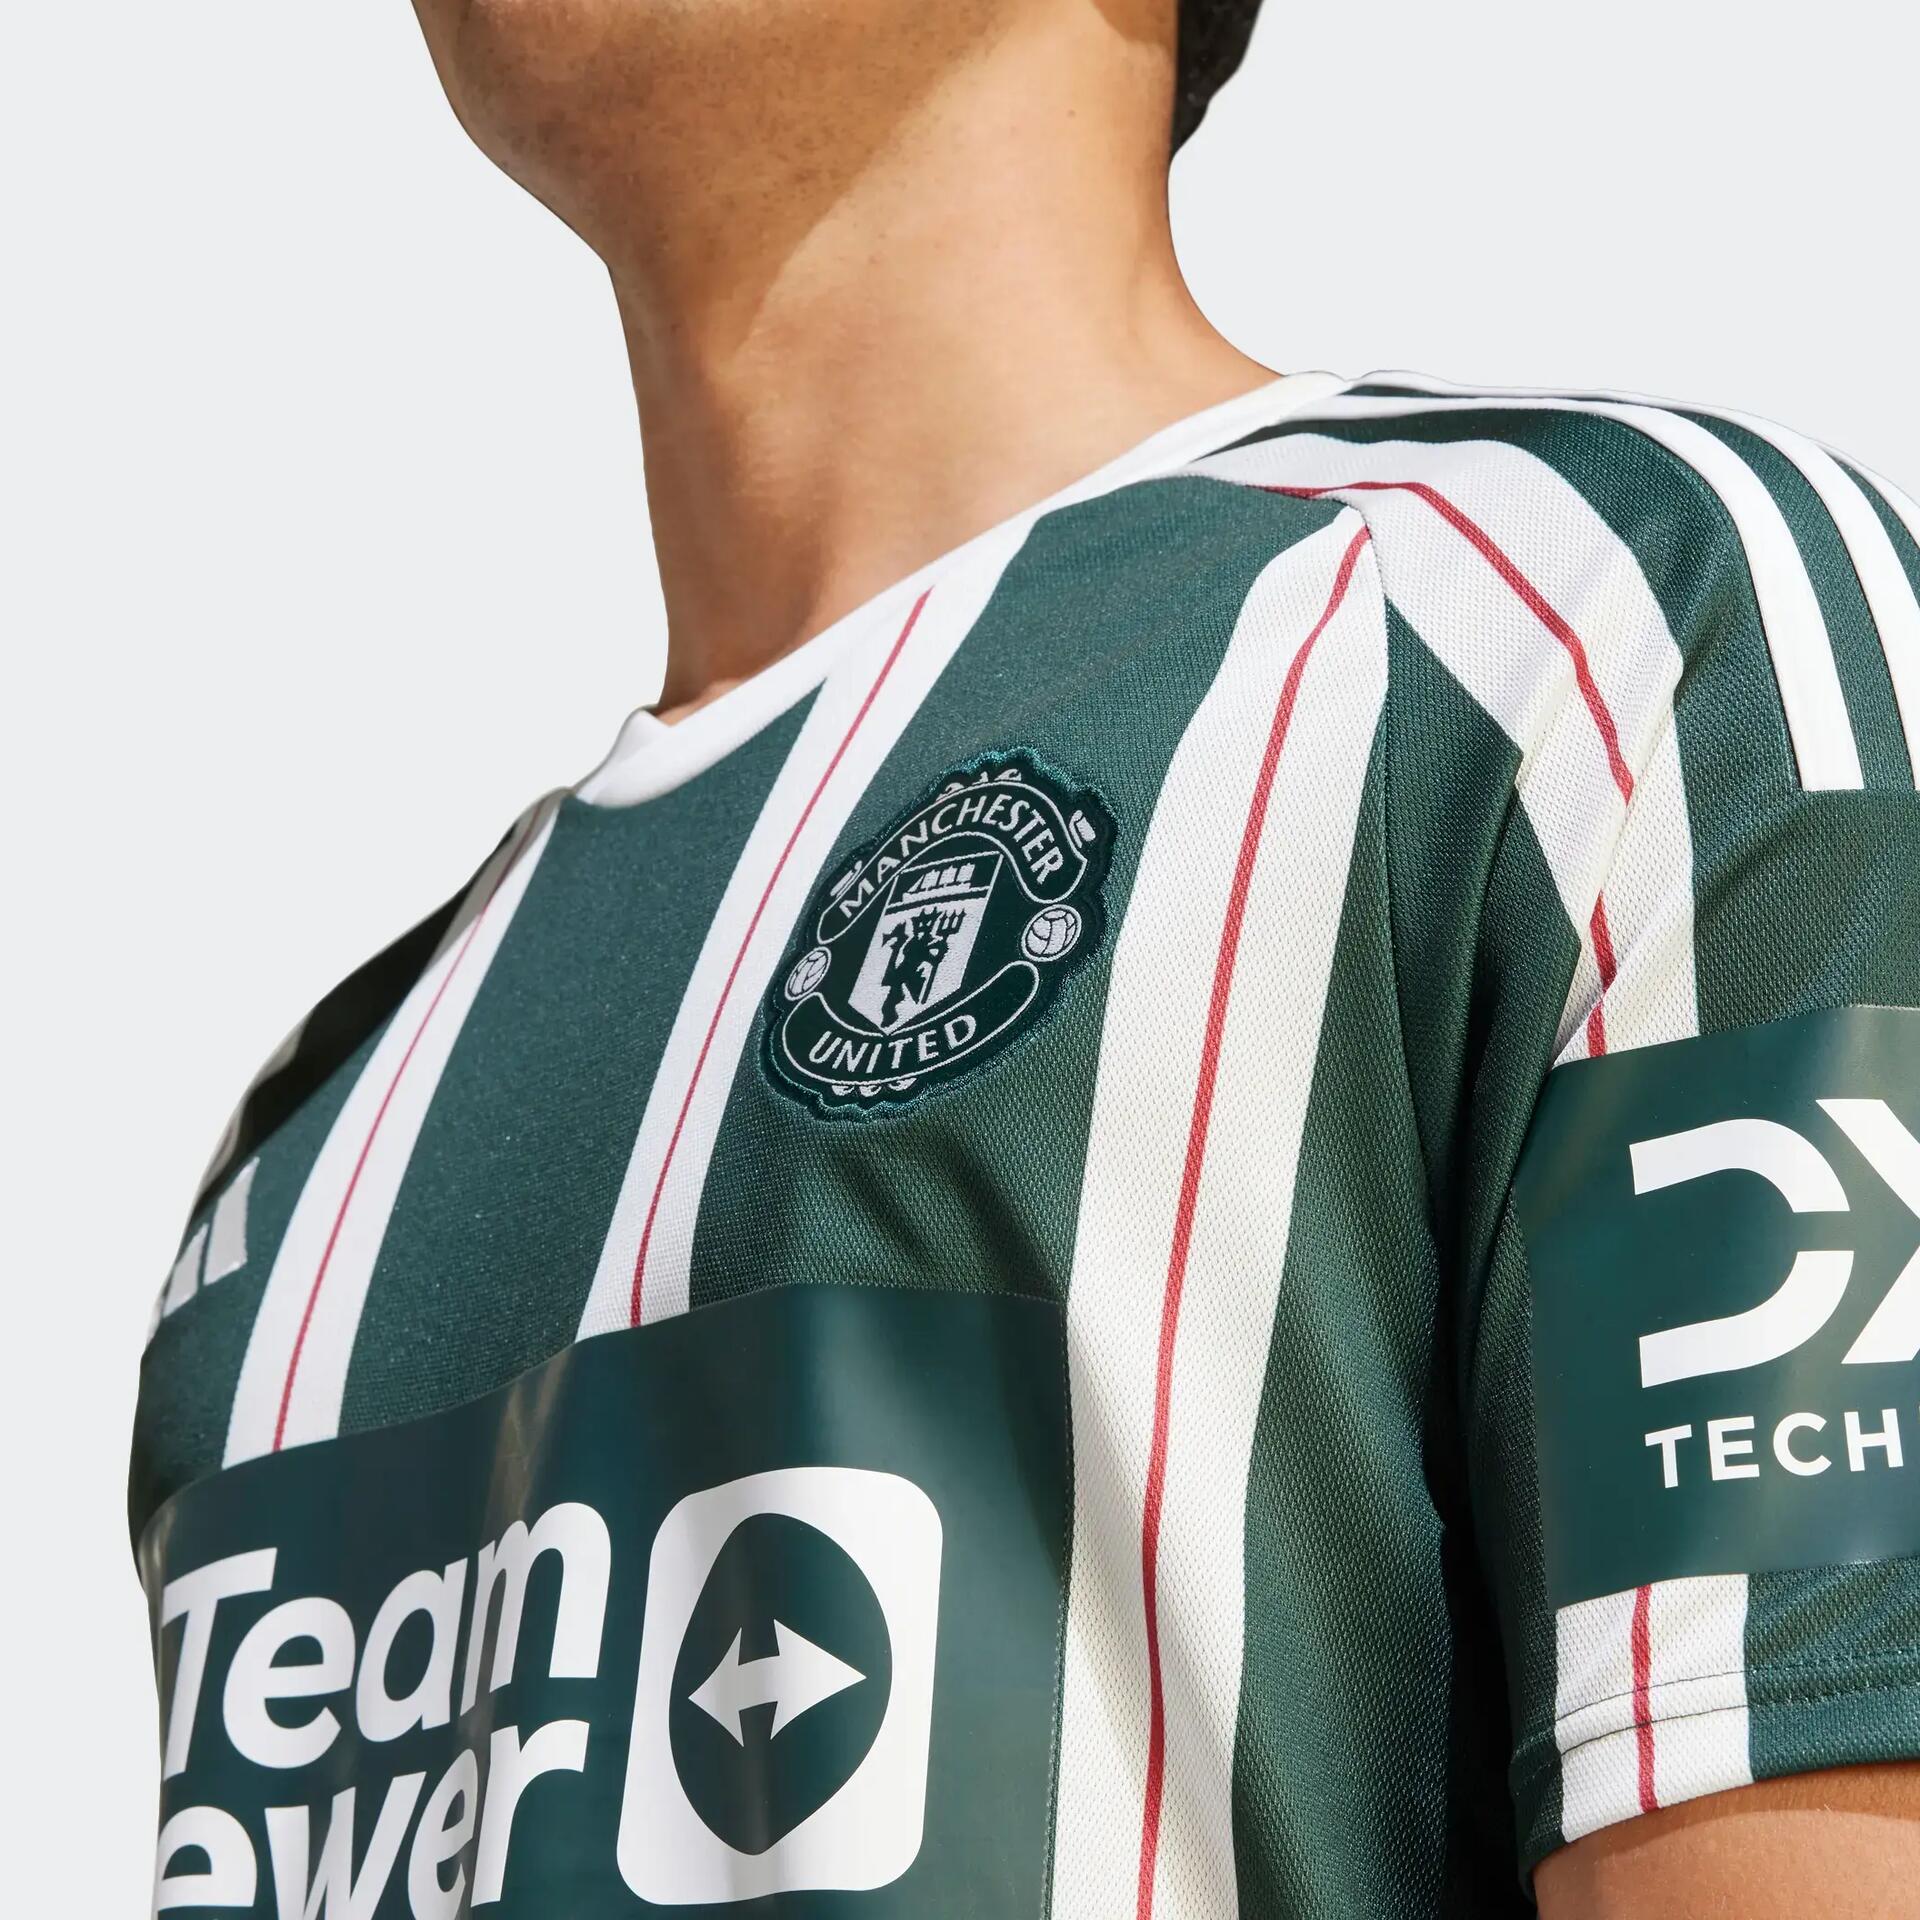 Adidas voetbalshirts voor spelers en fans